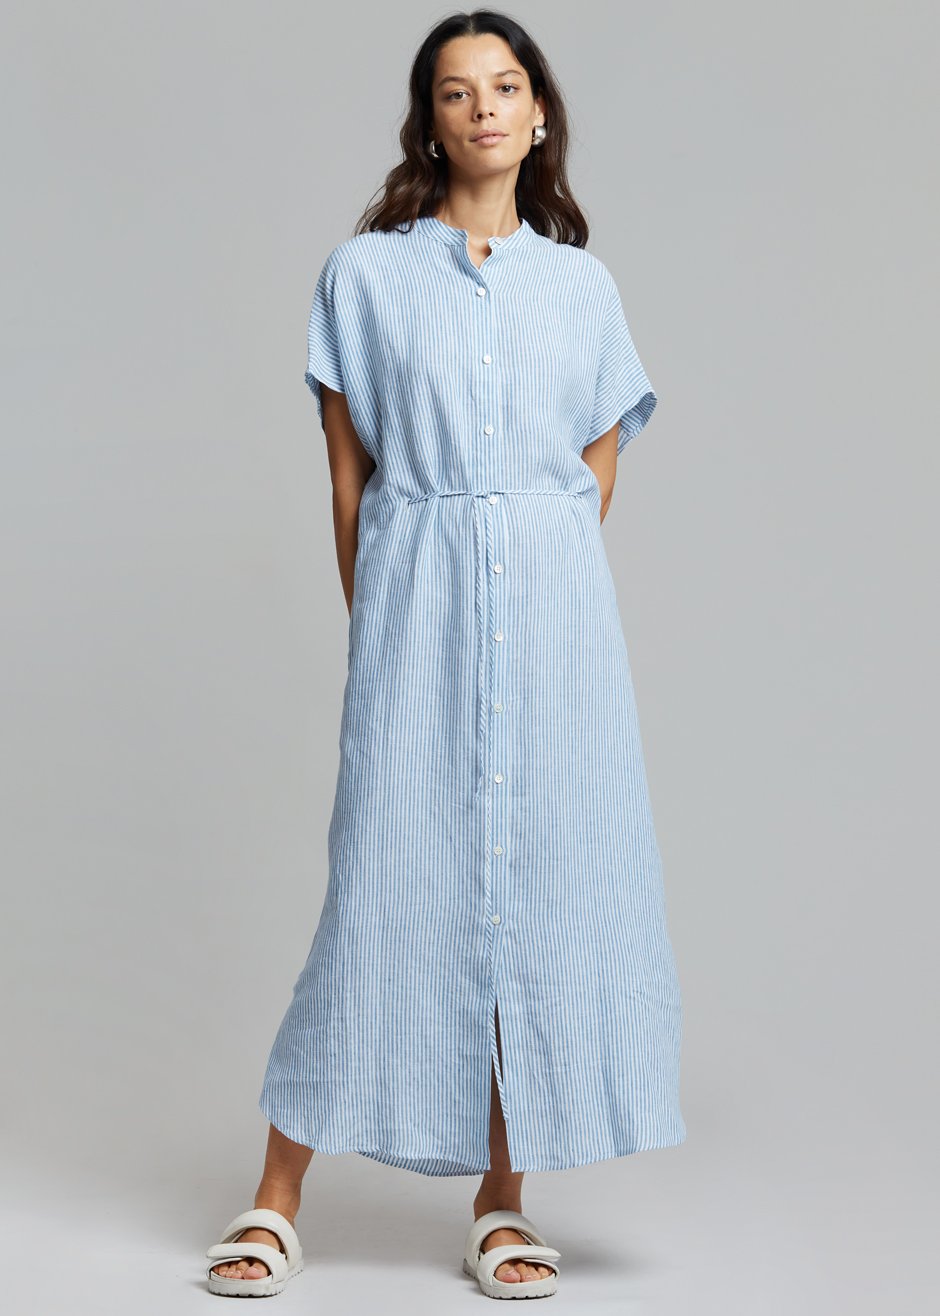 Malin Shirt Dress - Blue/White Stripe